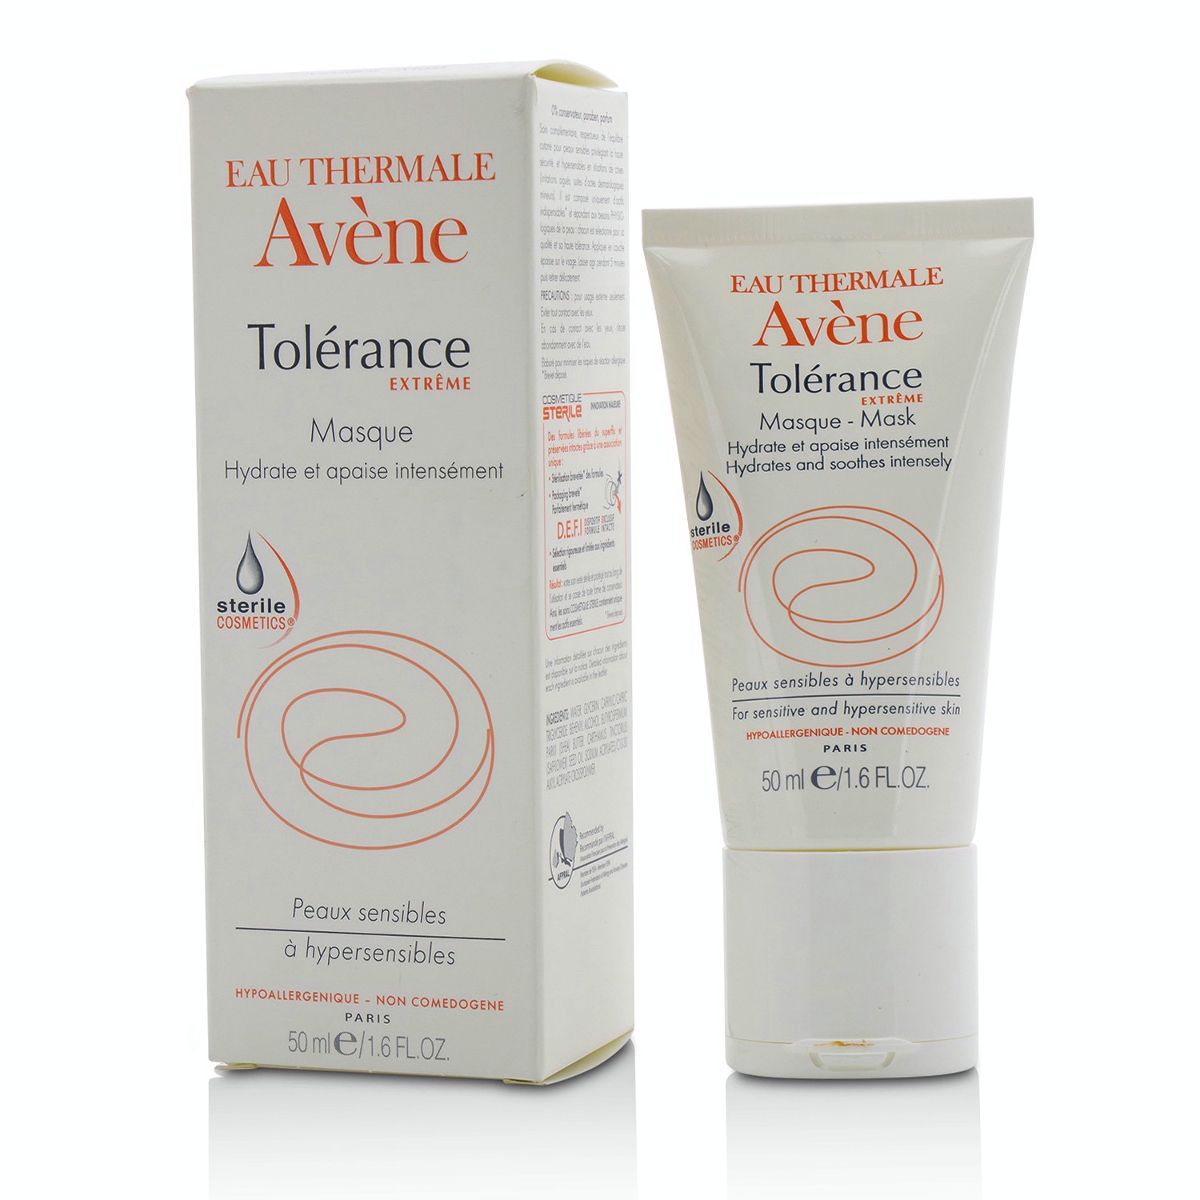 Tolerance Extreme Mask - For Sensitive  Hypersensitive Skin Avene Image